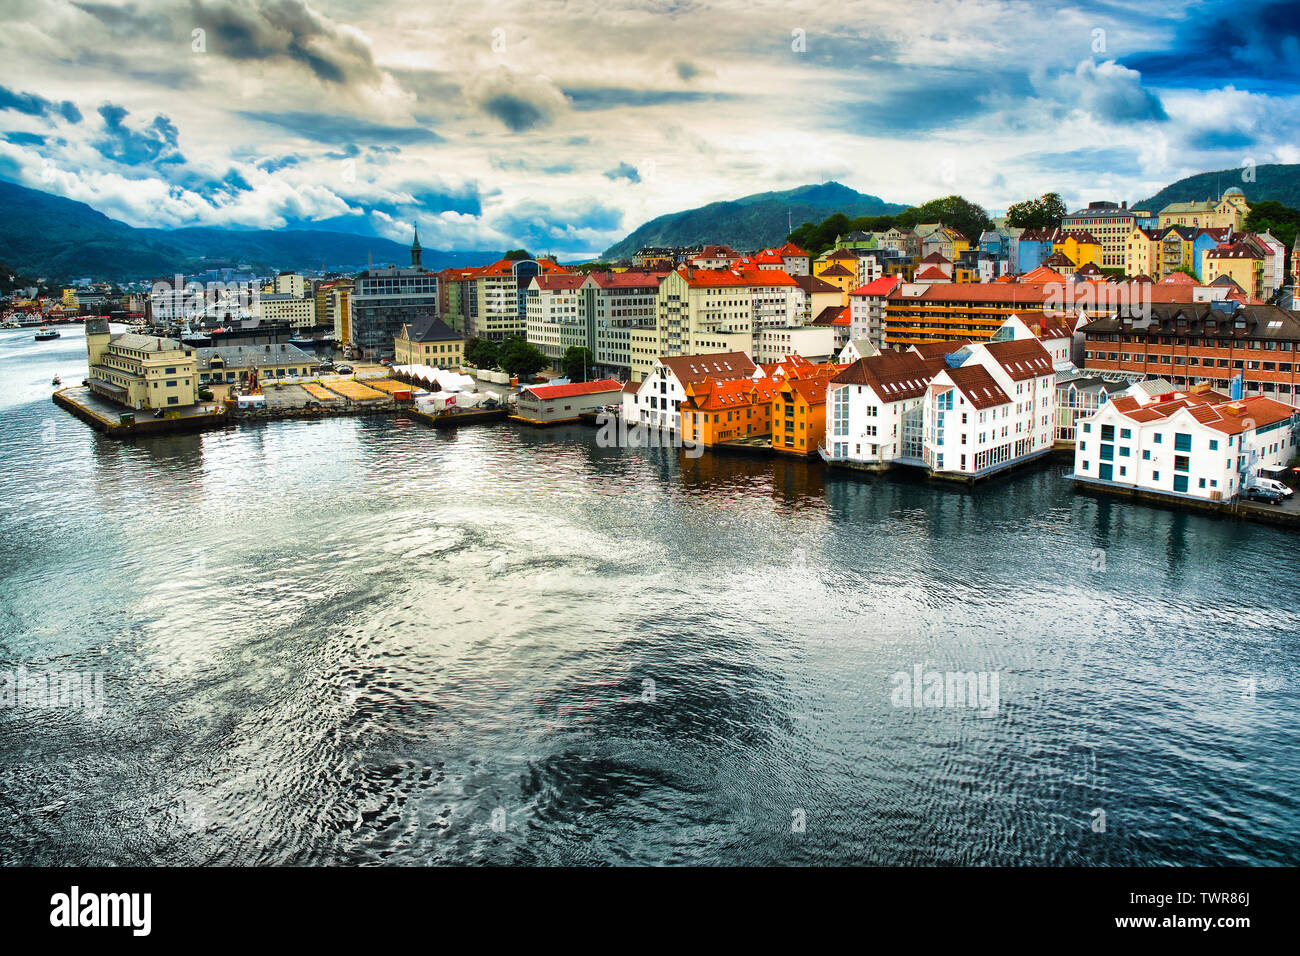 Bergen Norway coastline buildings and port dramatic landscape Stock Photo